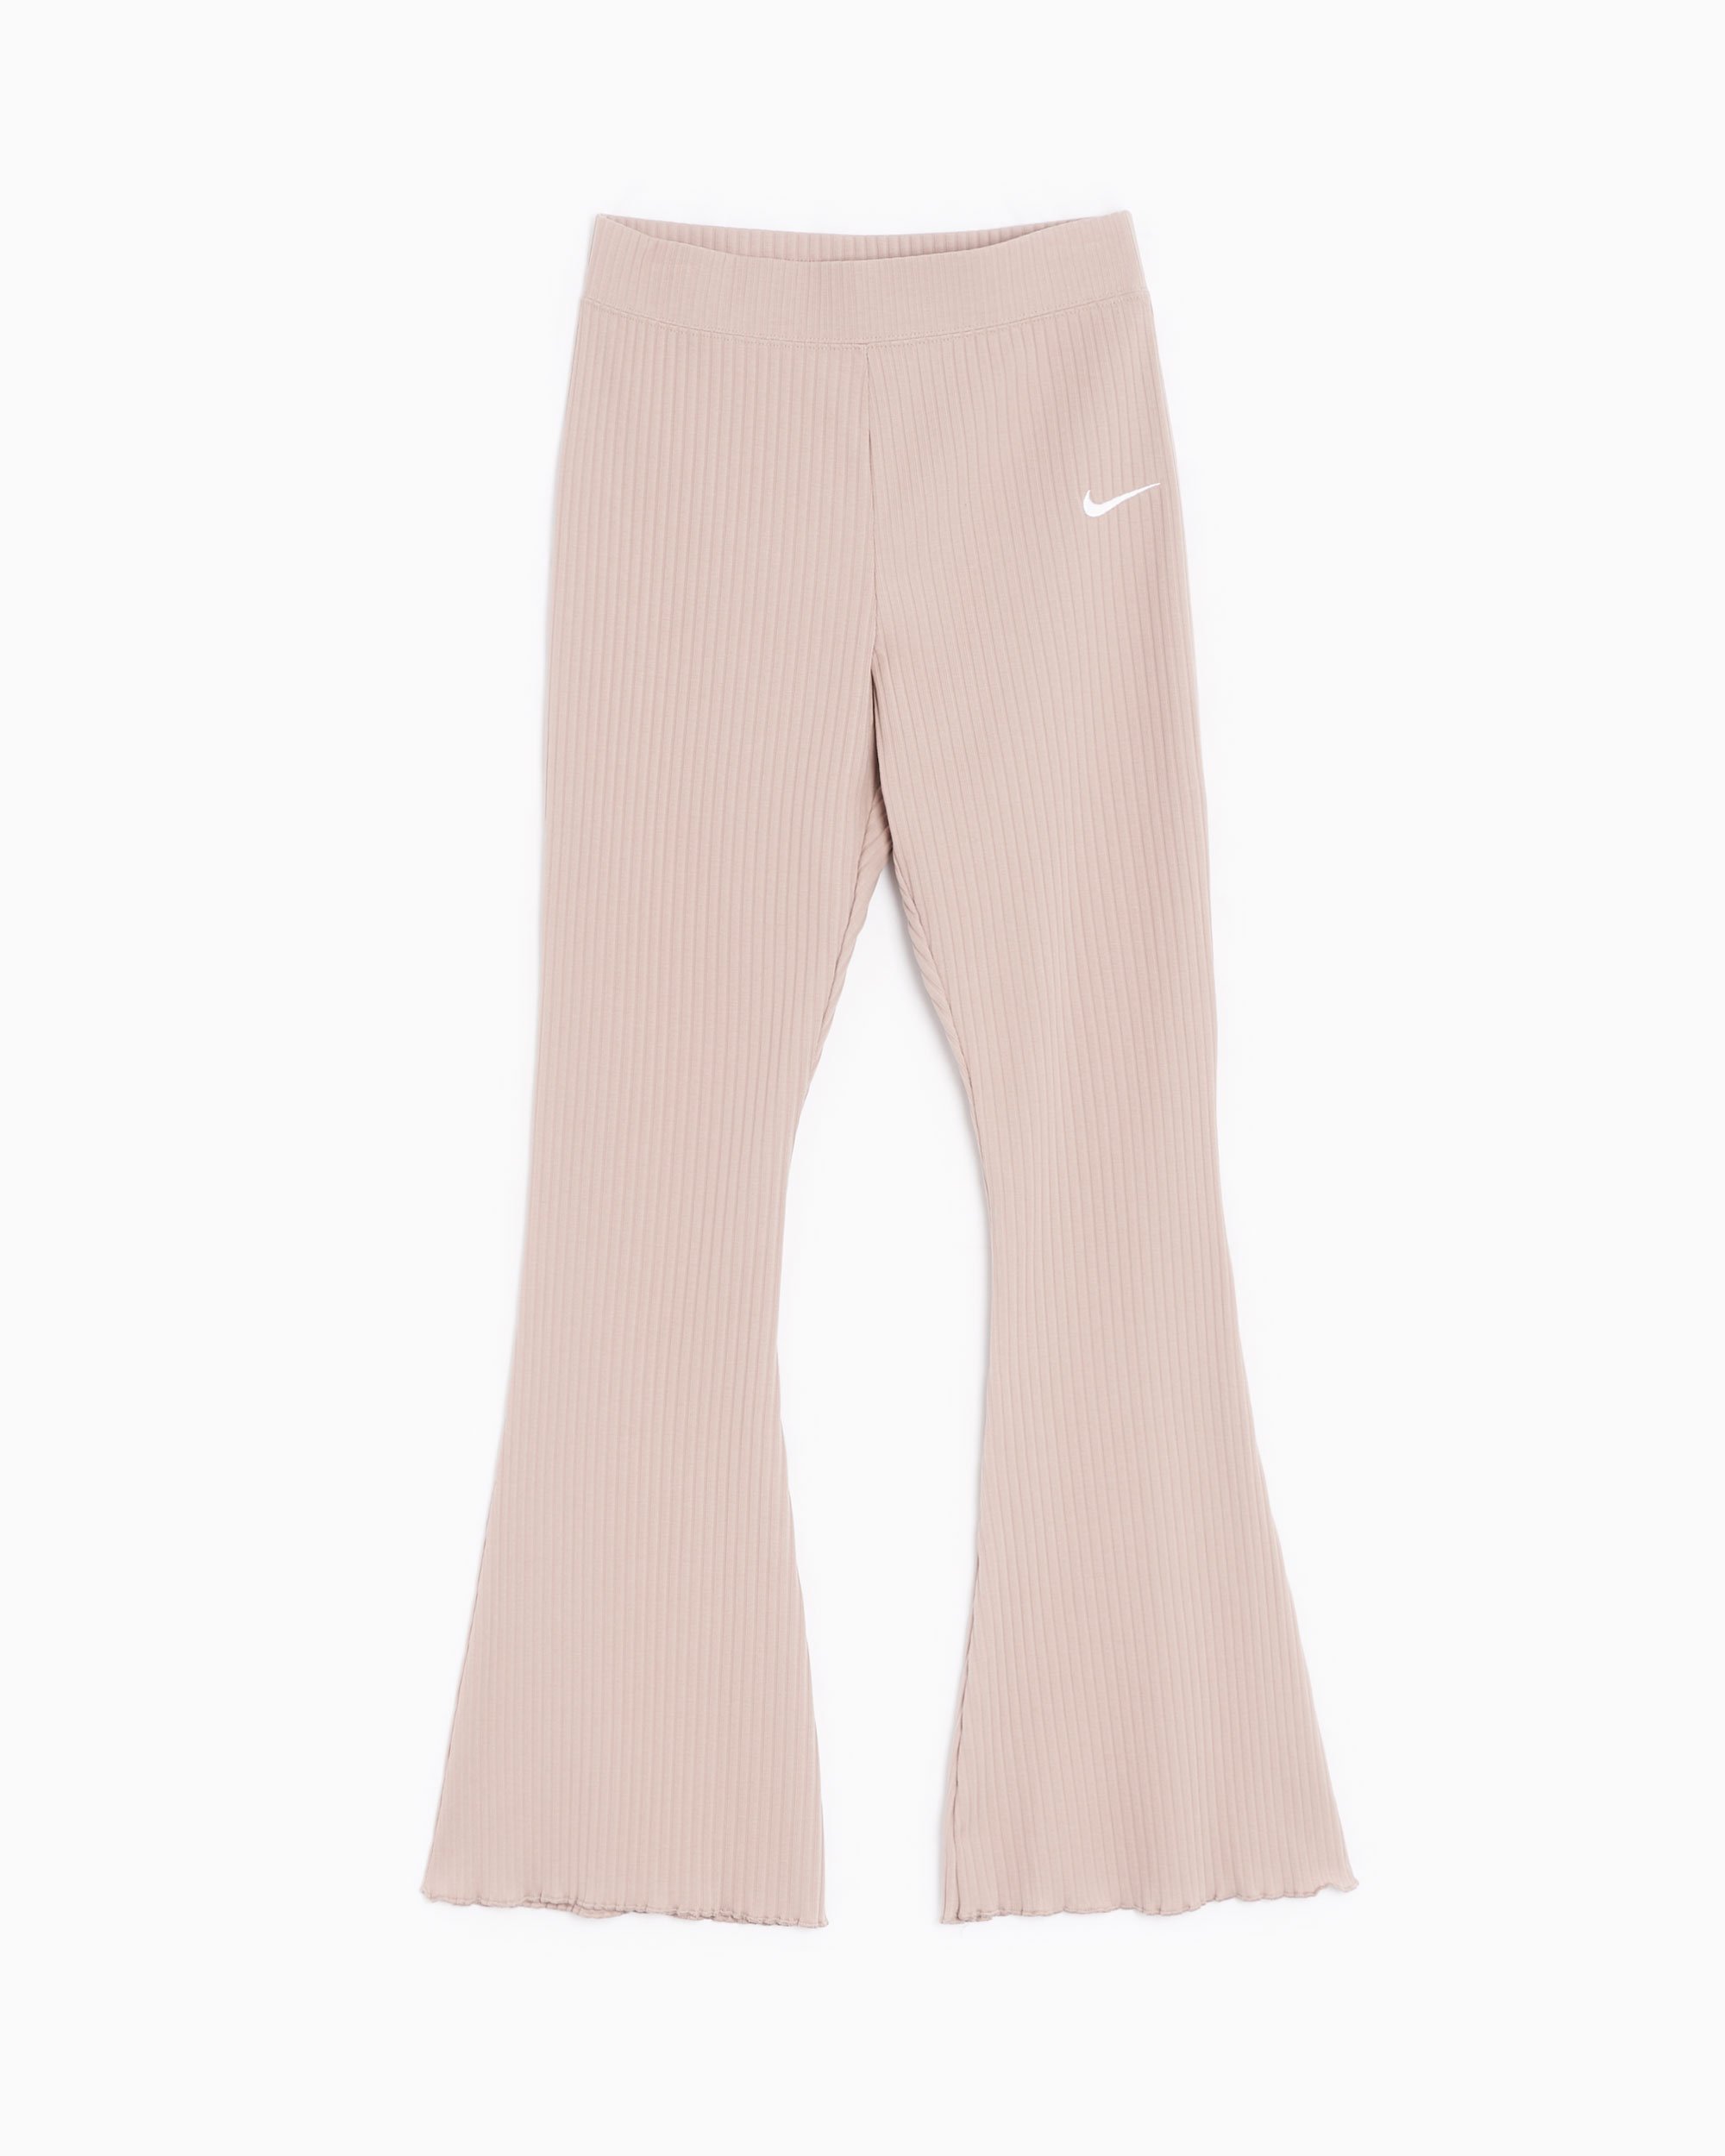 Nike Sportswear Women's High Waisted Ribbed Pants Beige DV7868-272